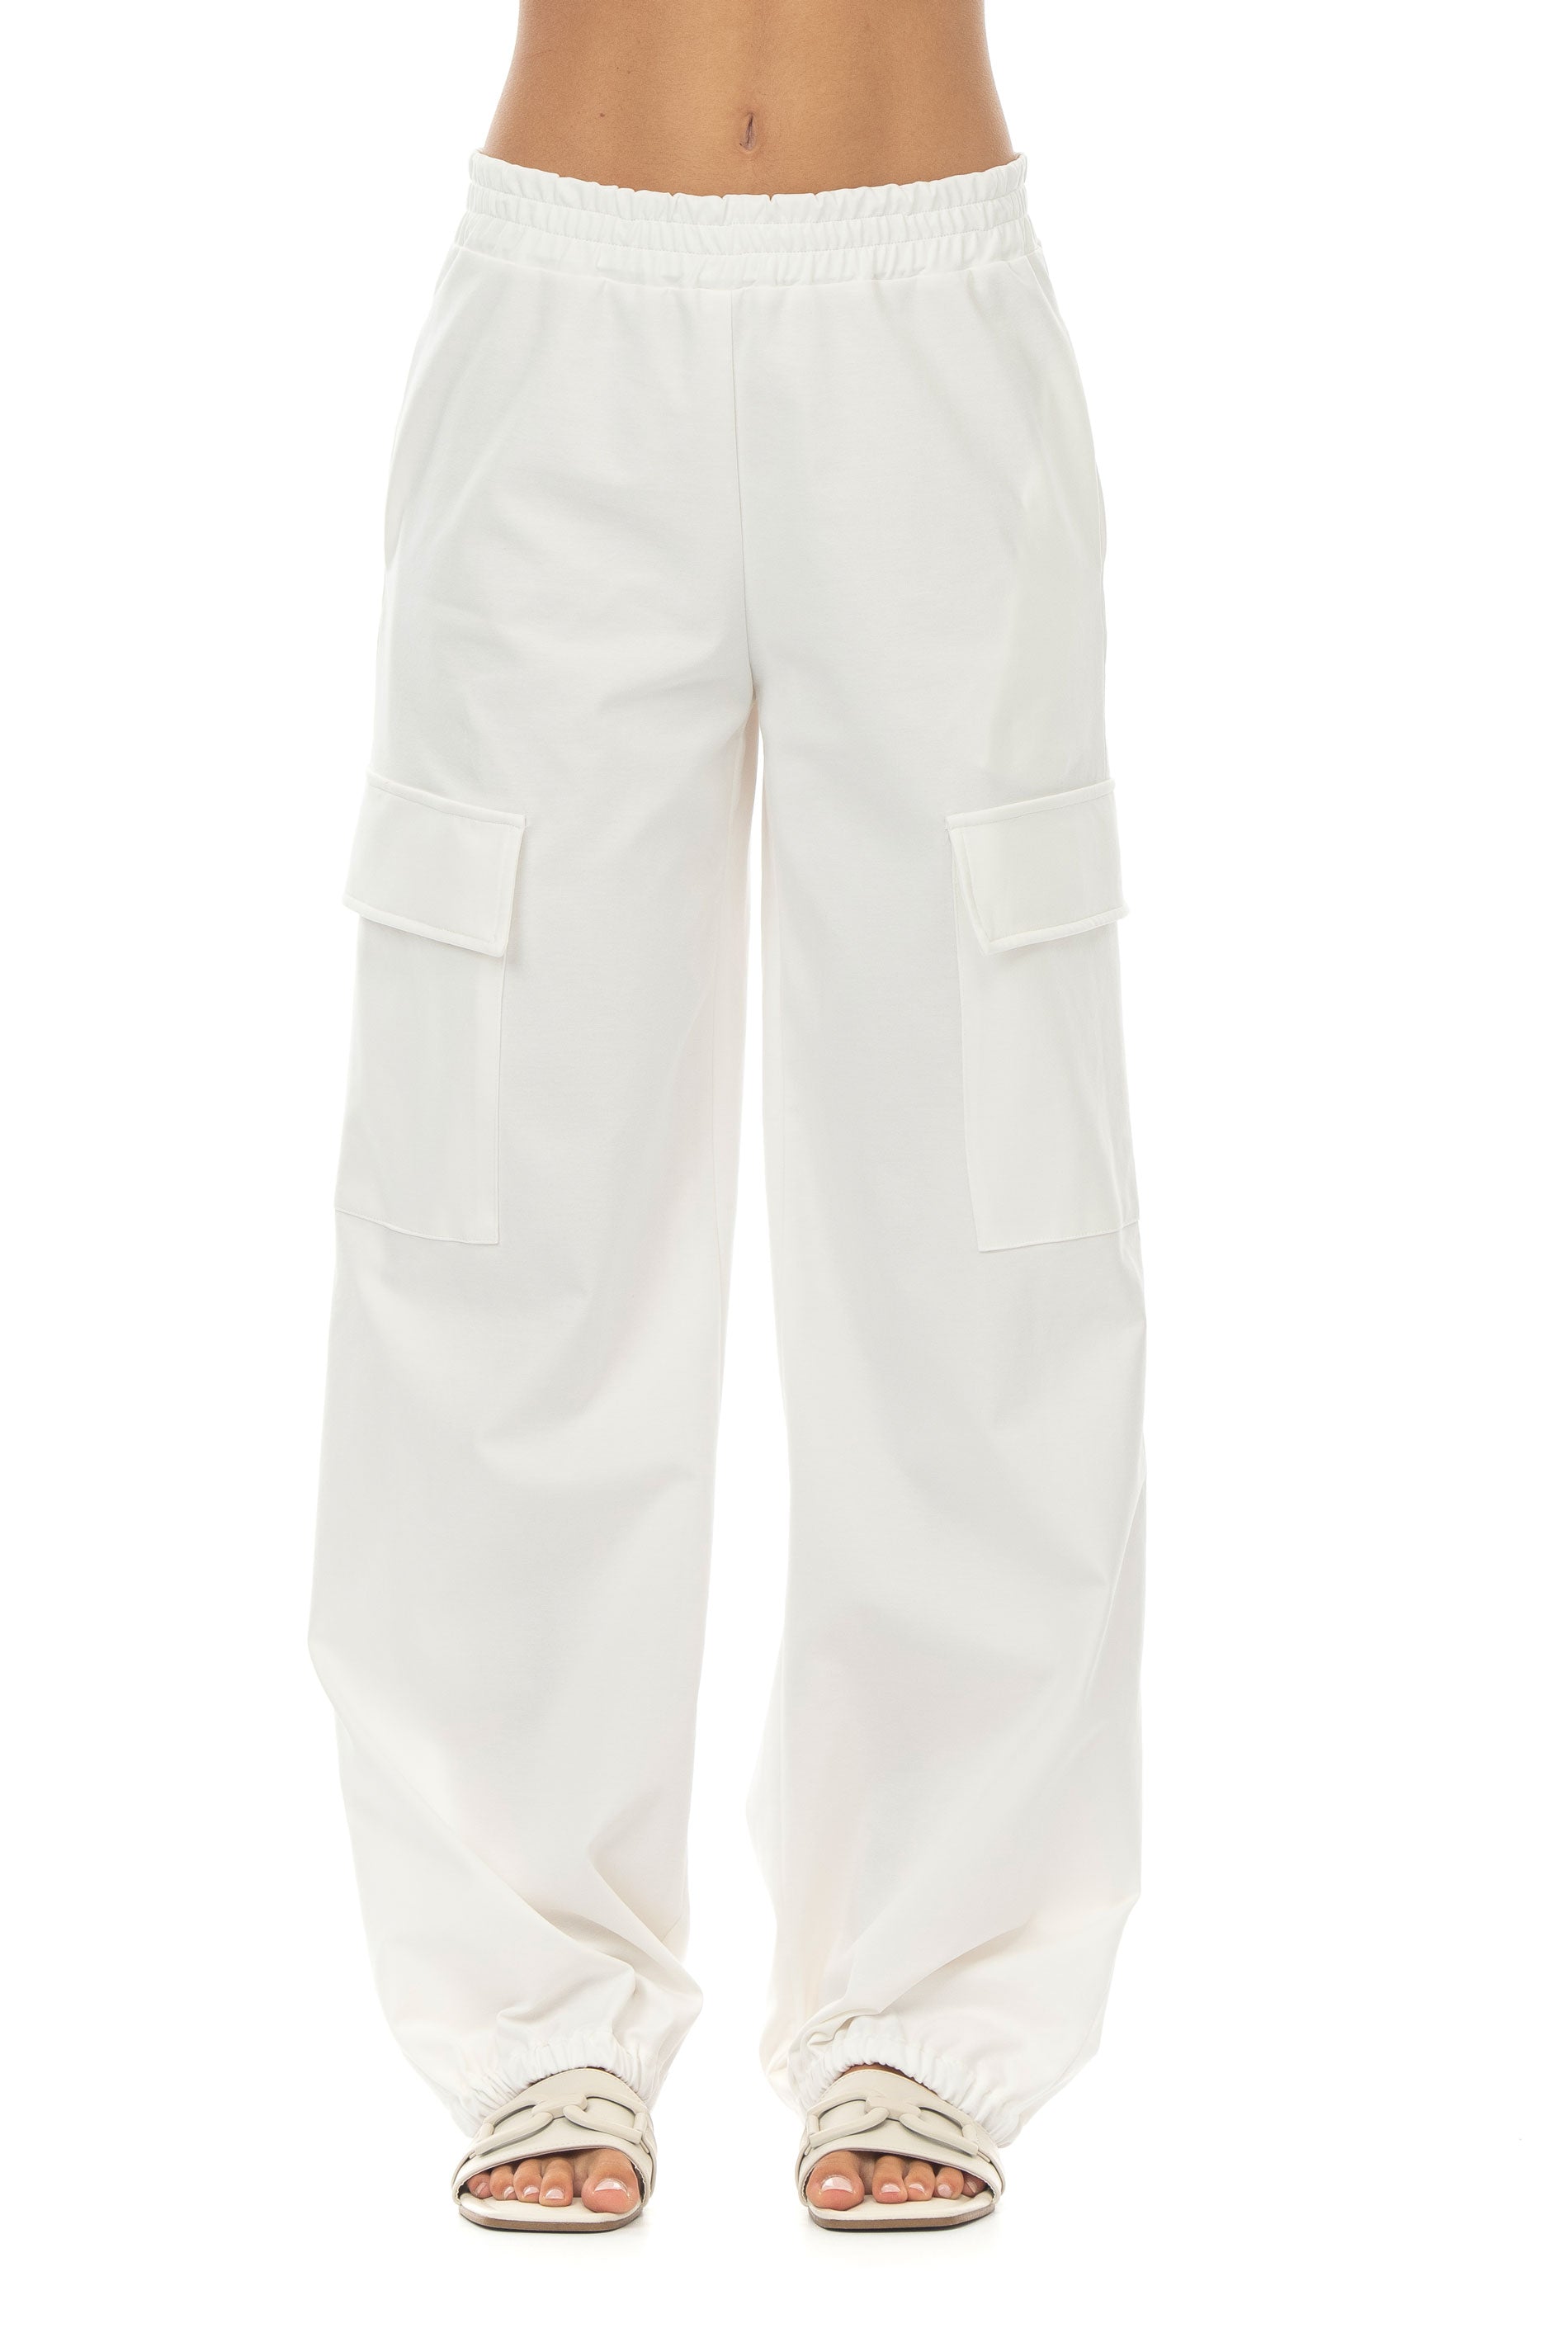 Pippo Pantalone Bianco